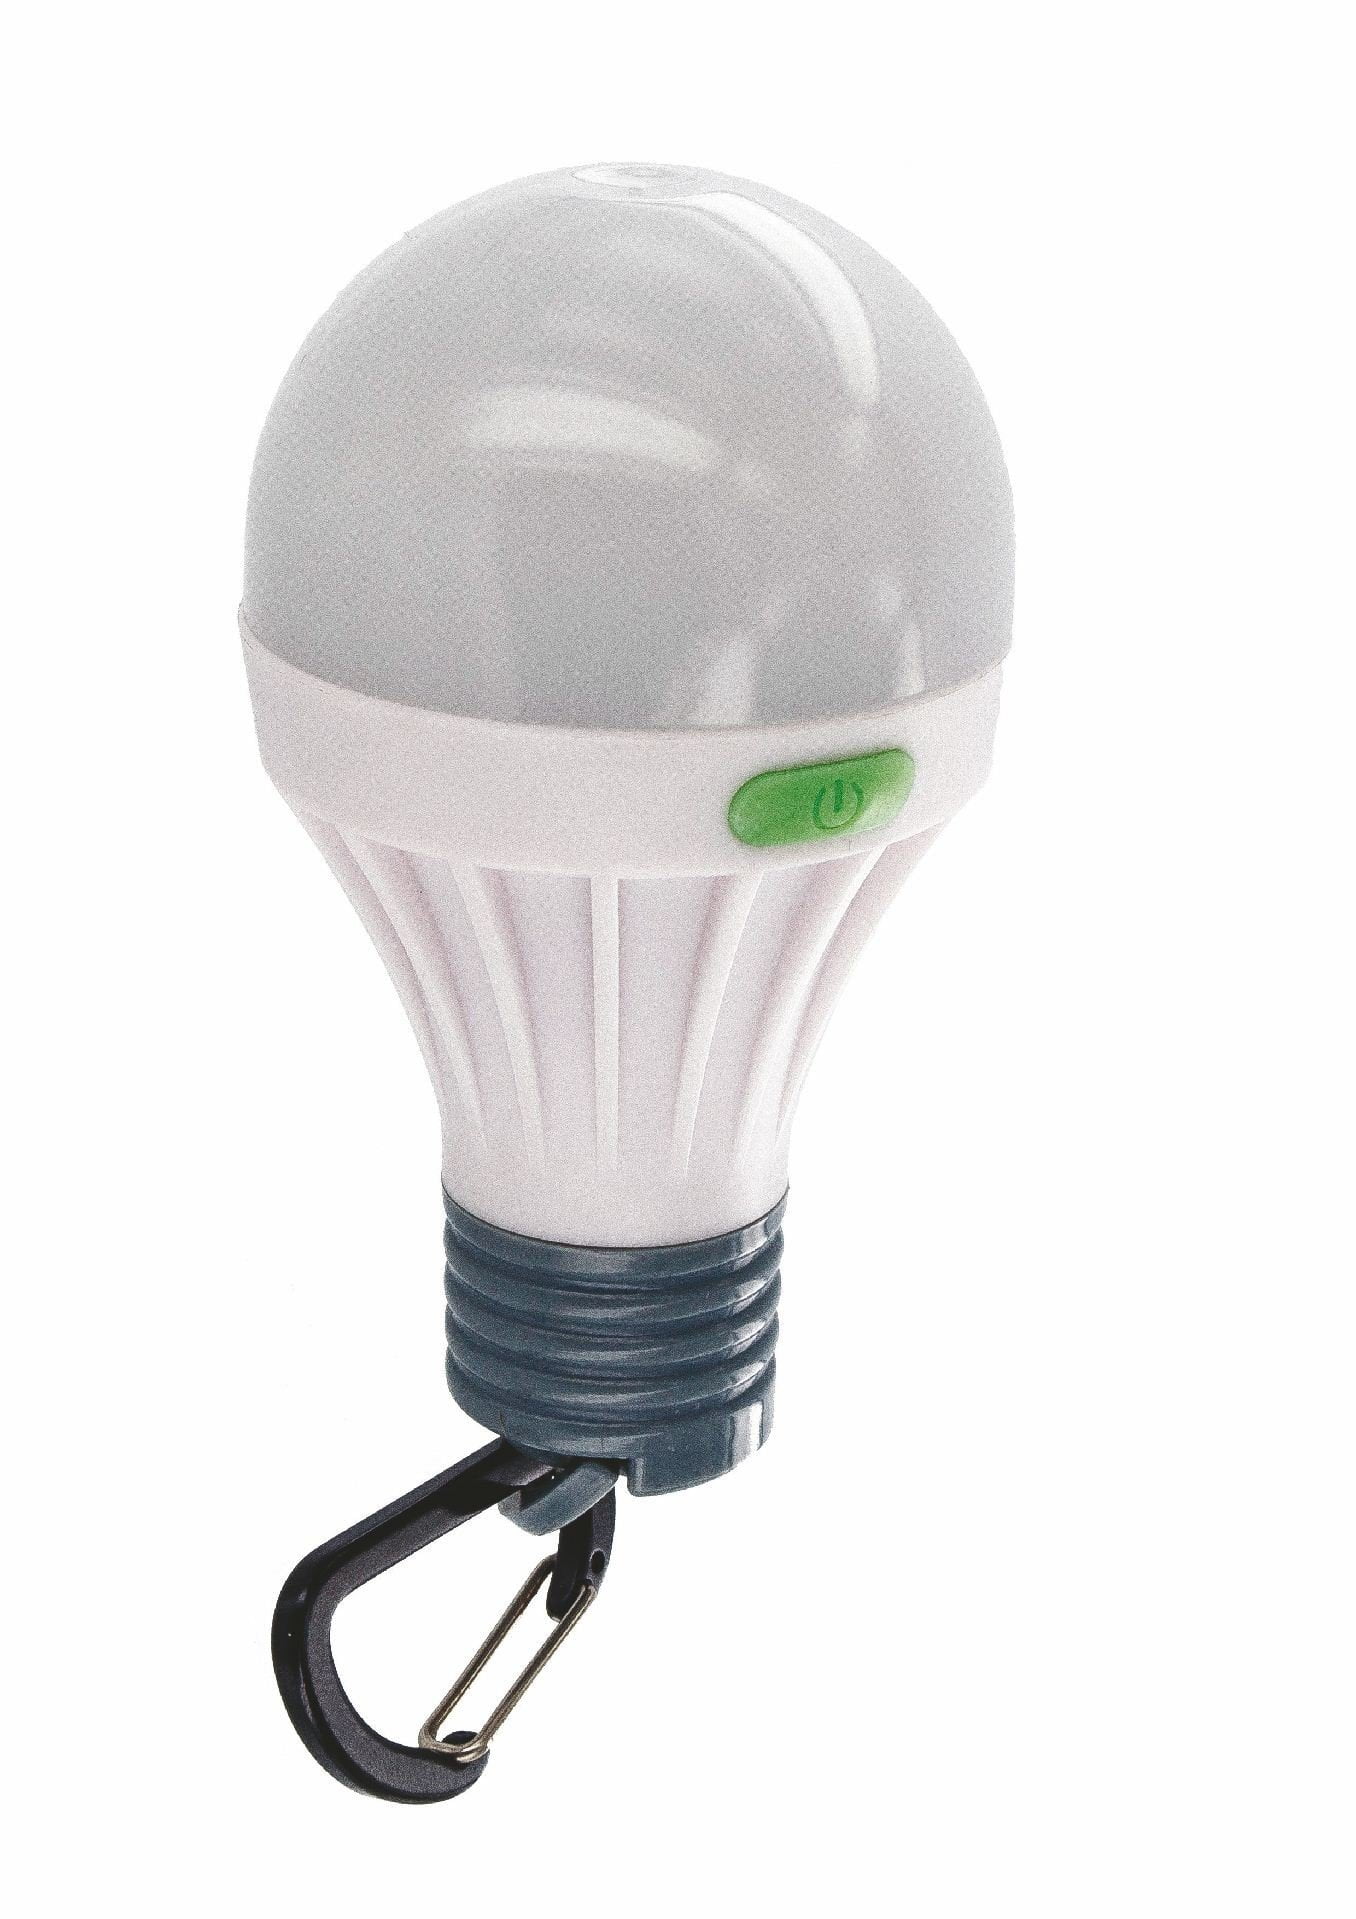 Highlander 1W LED Camping Light Bulb 